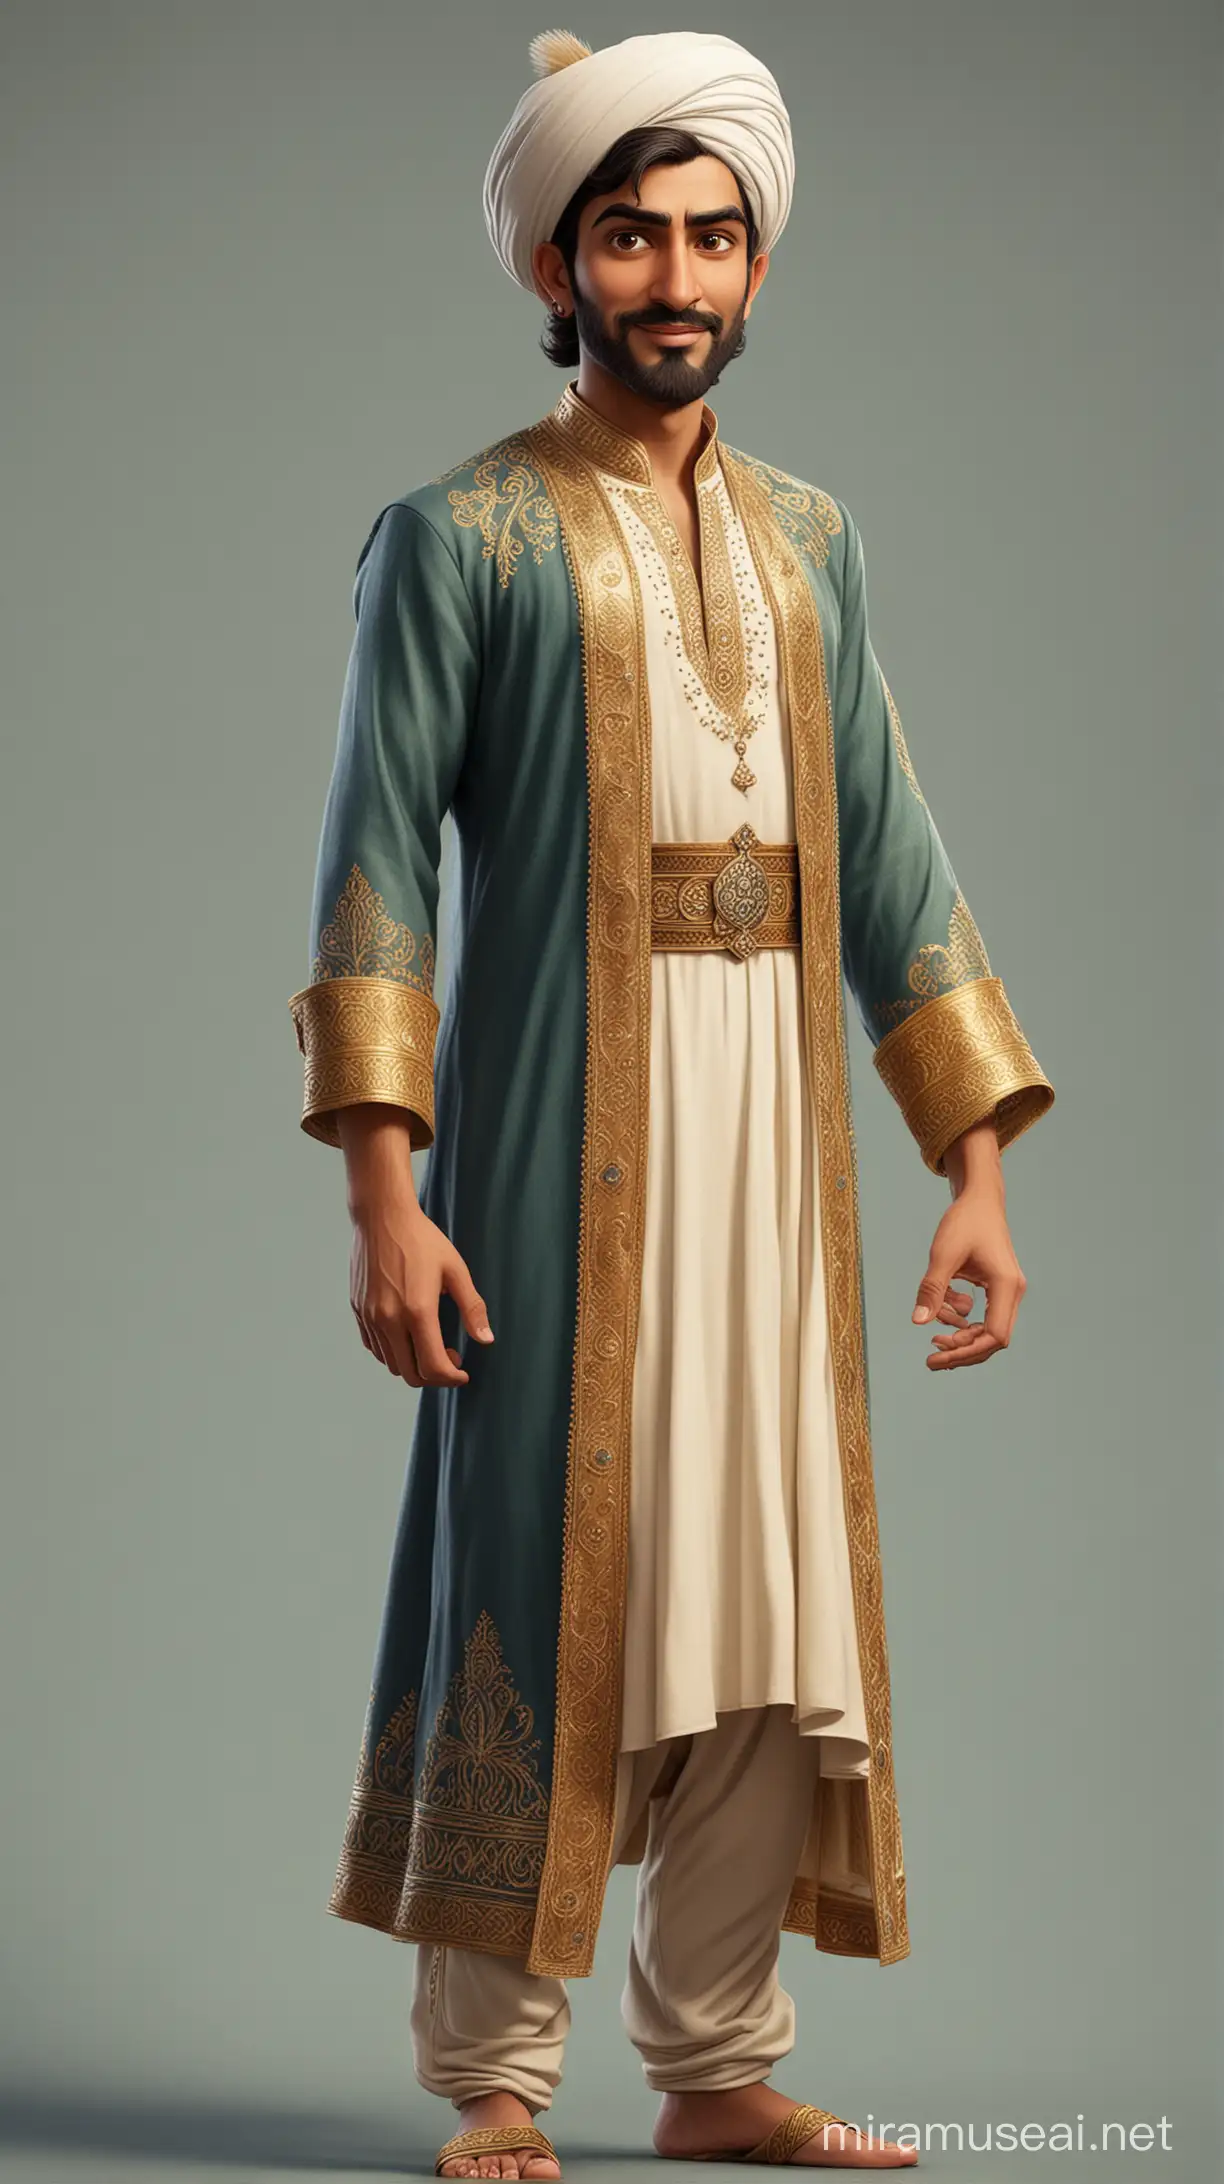 Persian Islamic King of Bengal in Shahi Attire Majestic Full Body Portrait